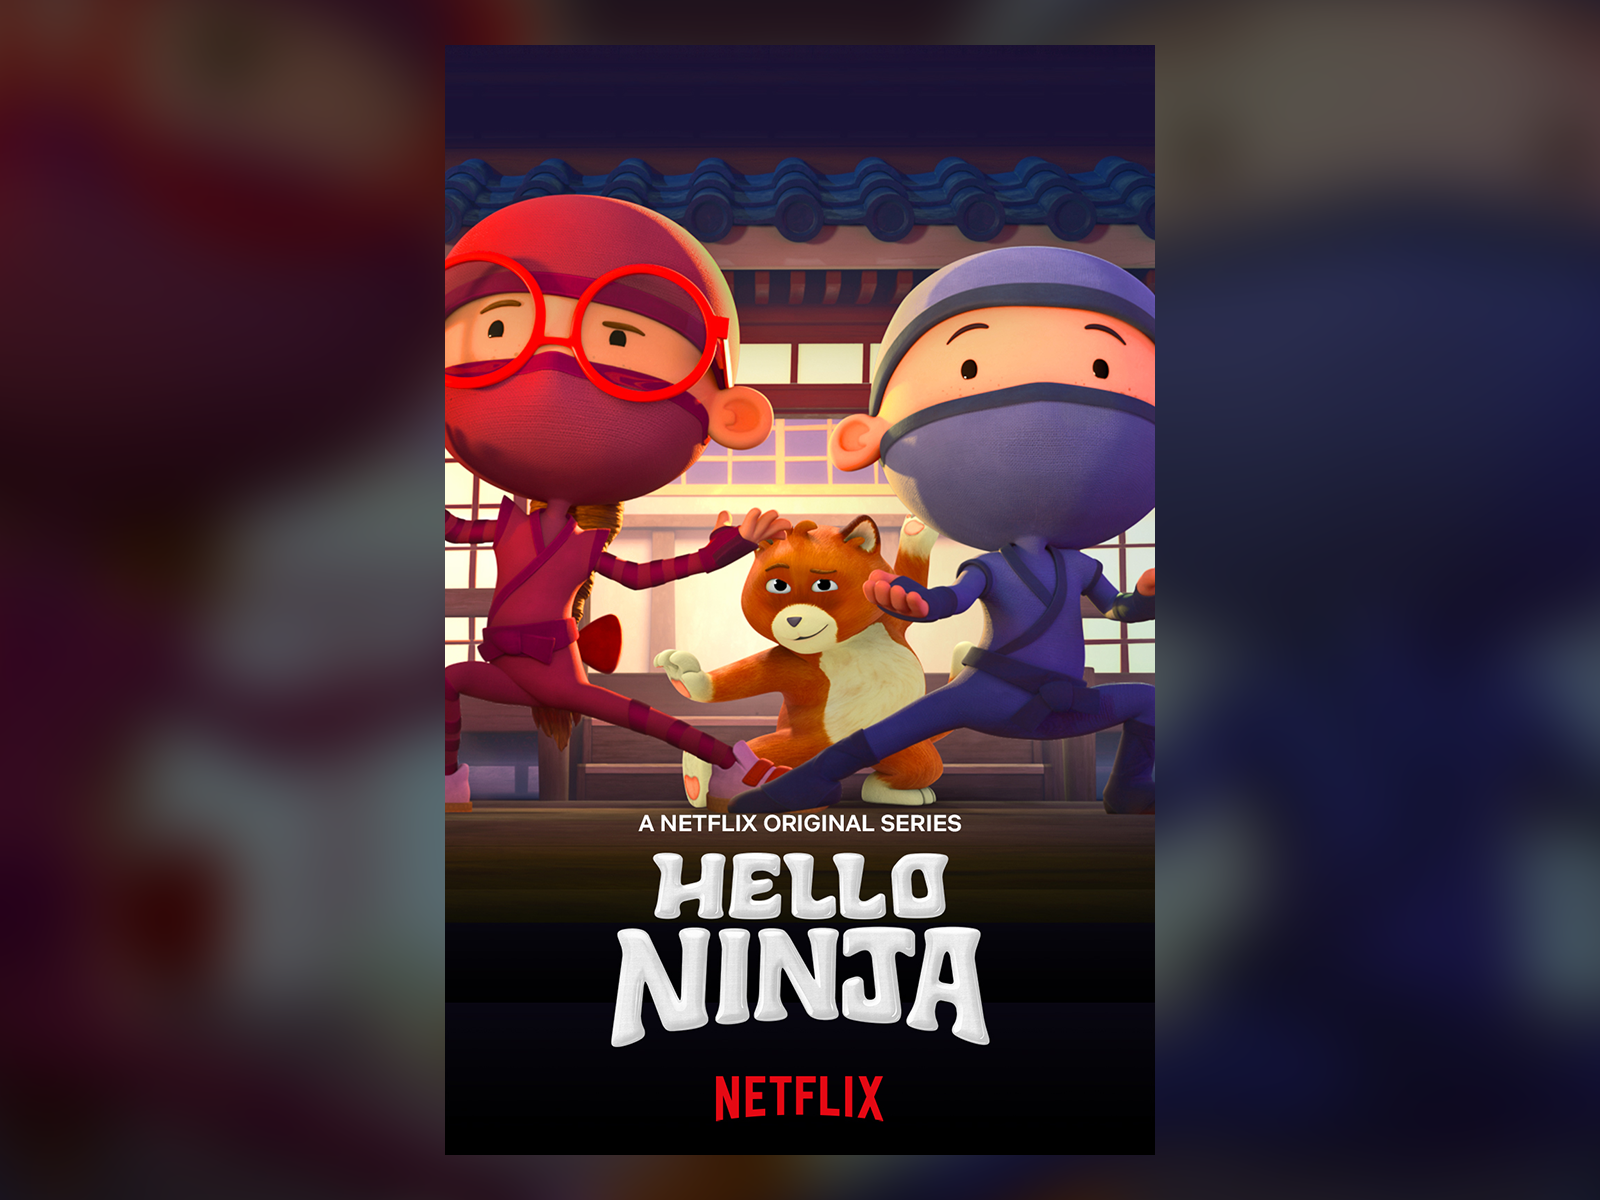 Hello ninja